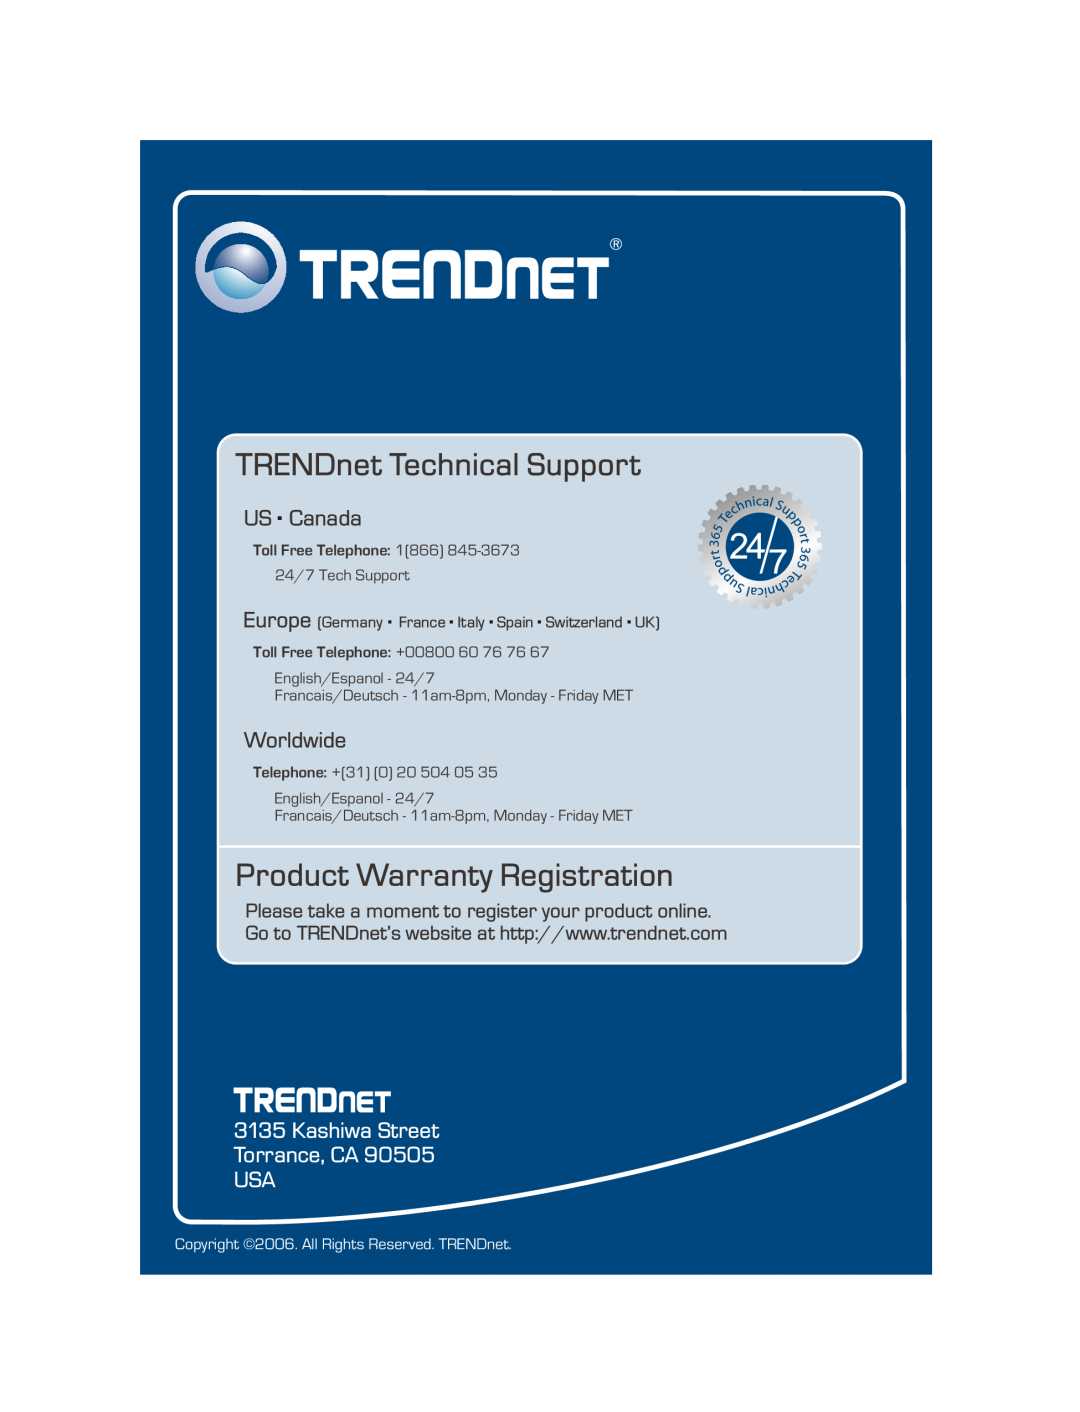 TRENDnet tk-209k TRENDnet Technical Support, Product Warranty Registration, US . Canada, Worldwide, Toll Free Telephone 